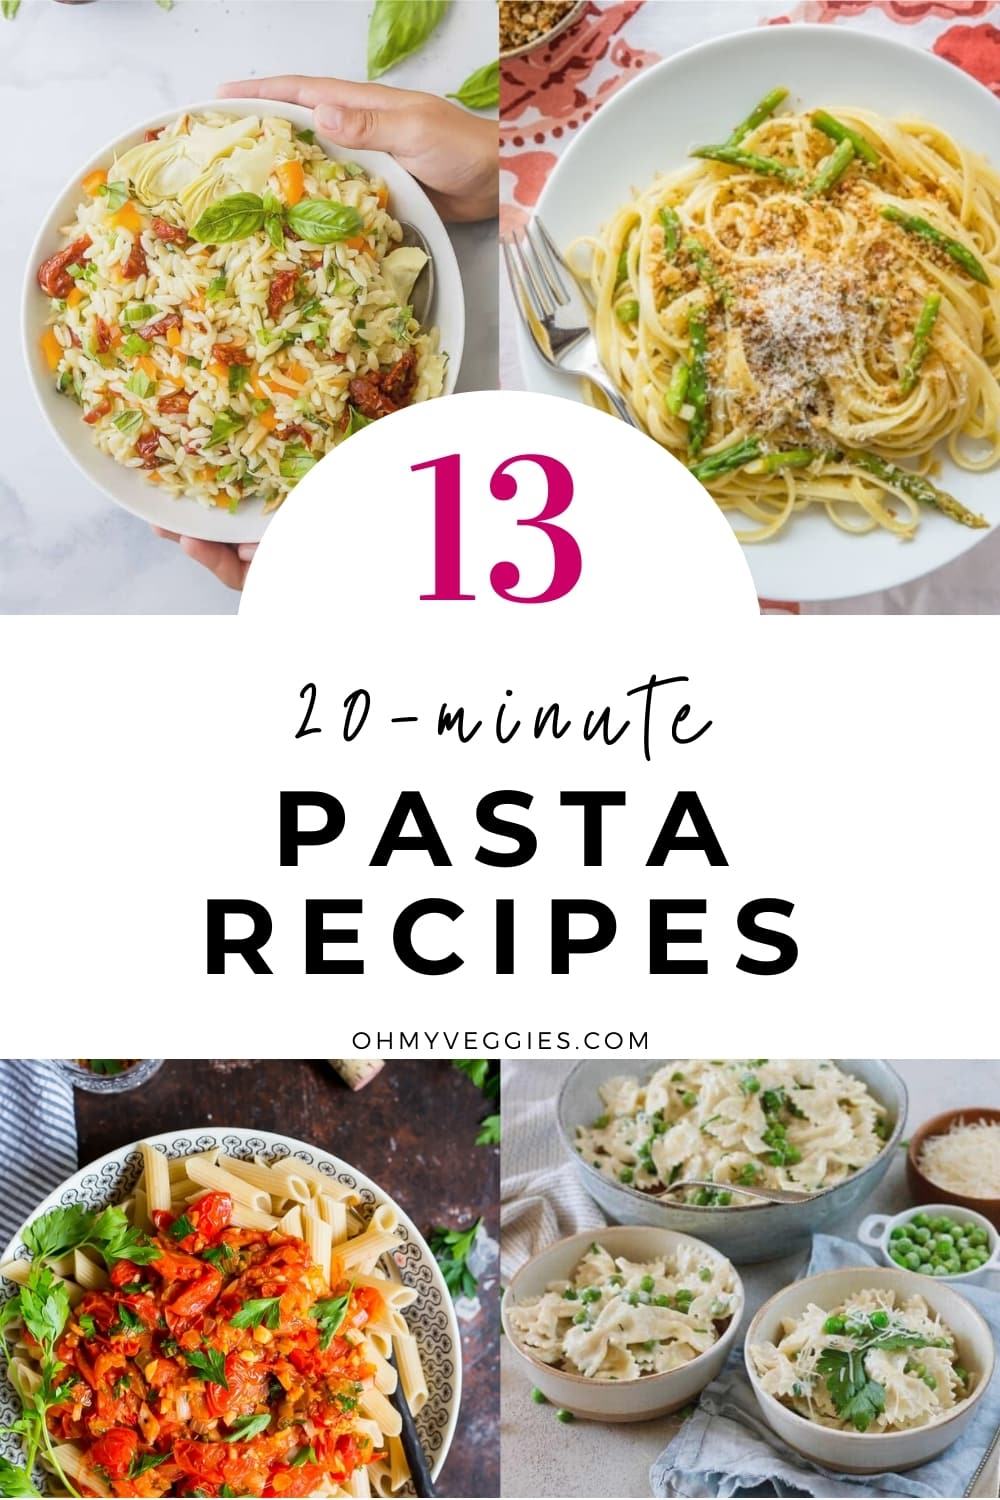 13 Twenty-Minute Pasta Recipes To Make Dinner a Breeze | Oh My Veggies